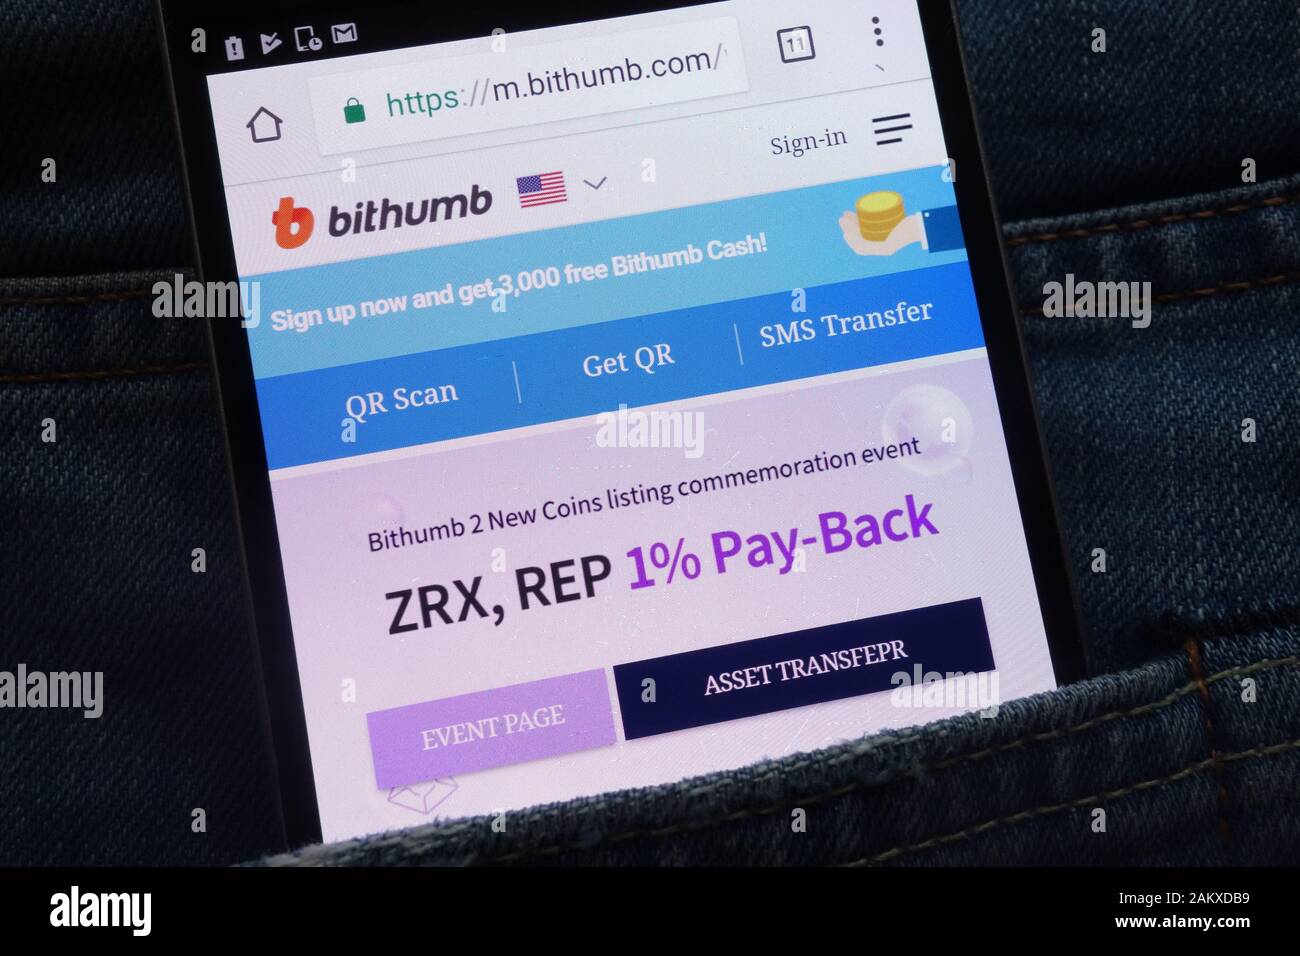 Bithumb cryptocurrency exchange website displayed on smartphone hidden in jeans pocket Stock Photo